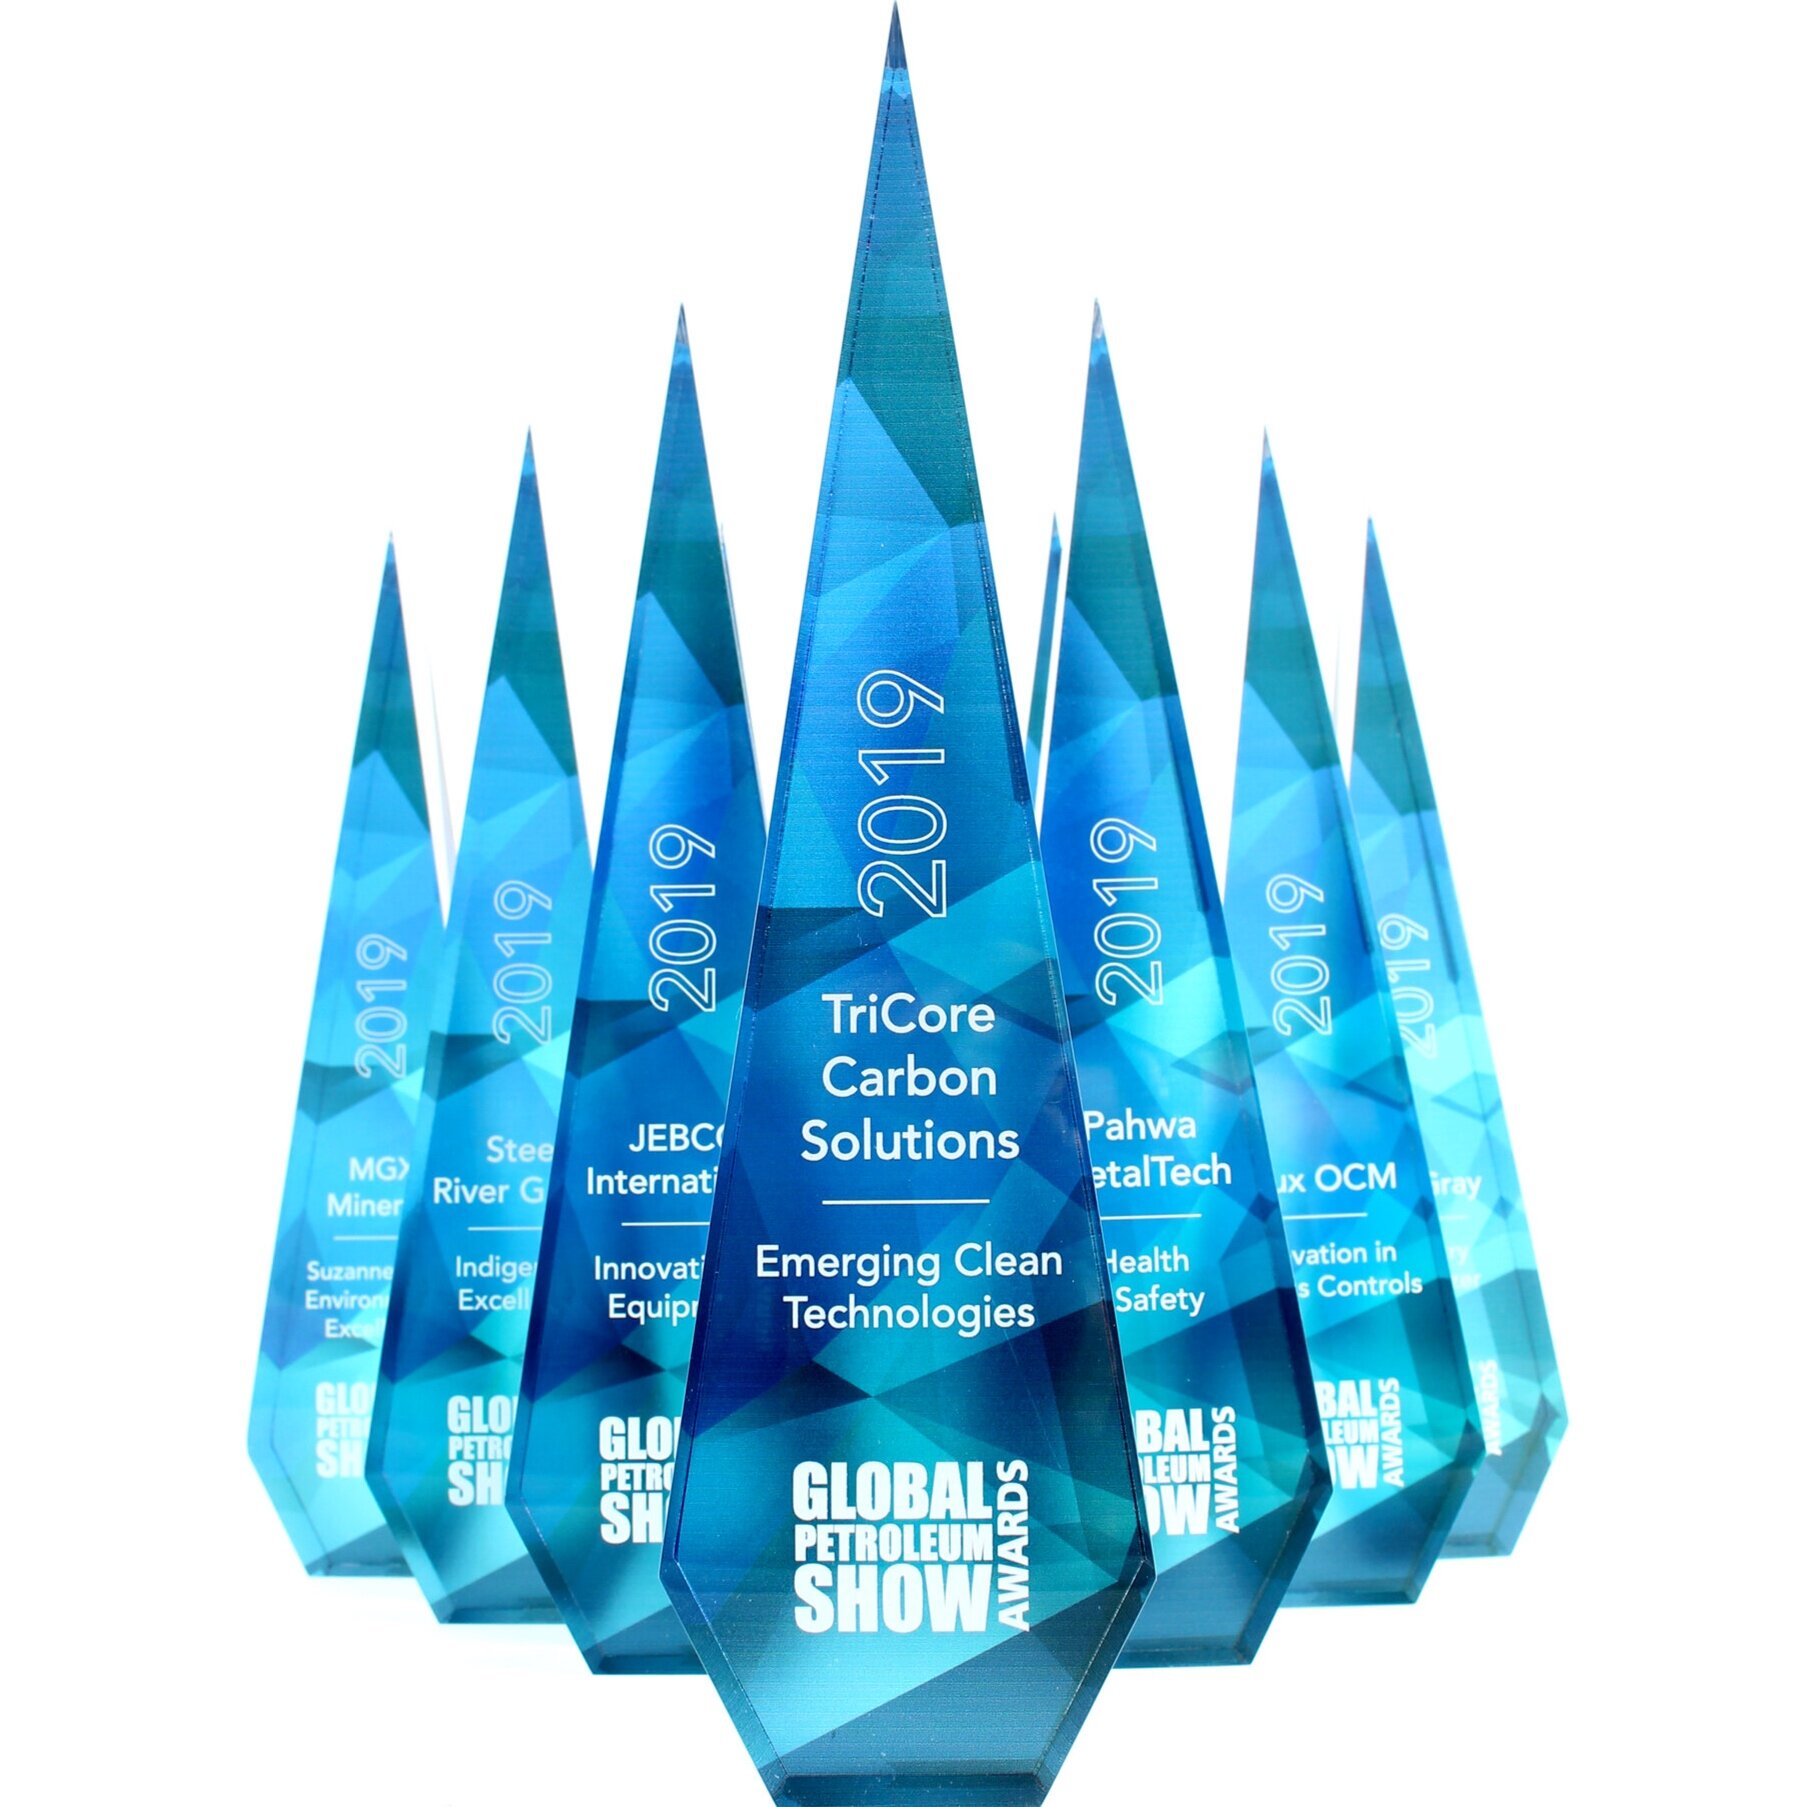 global petroleum show technologies awards